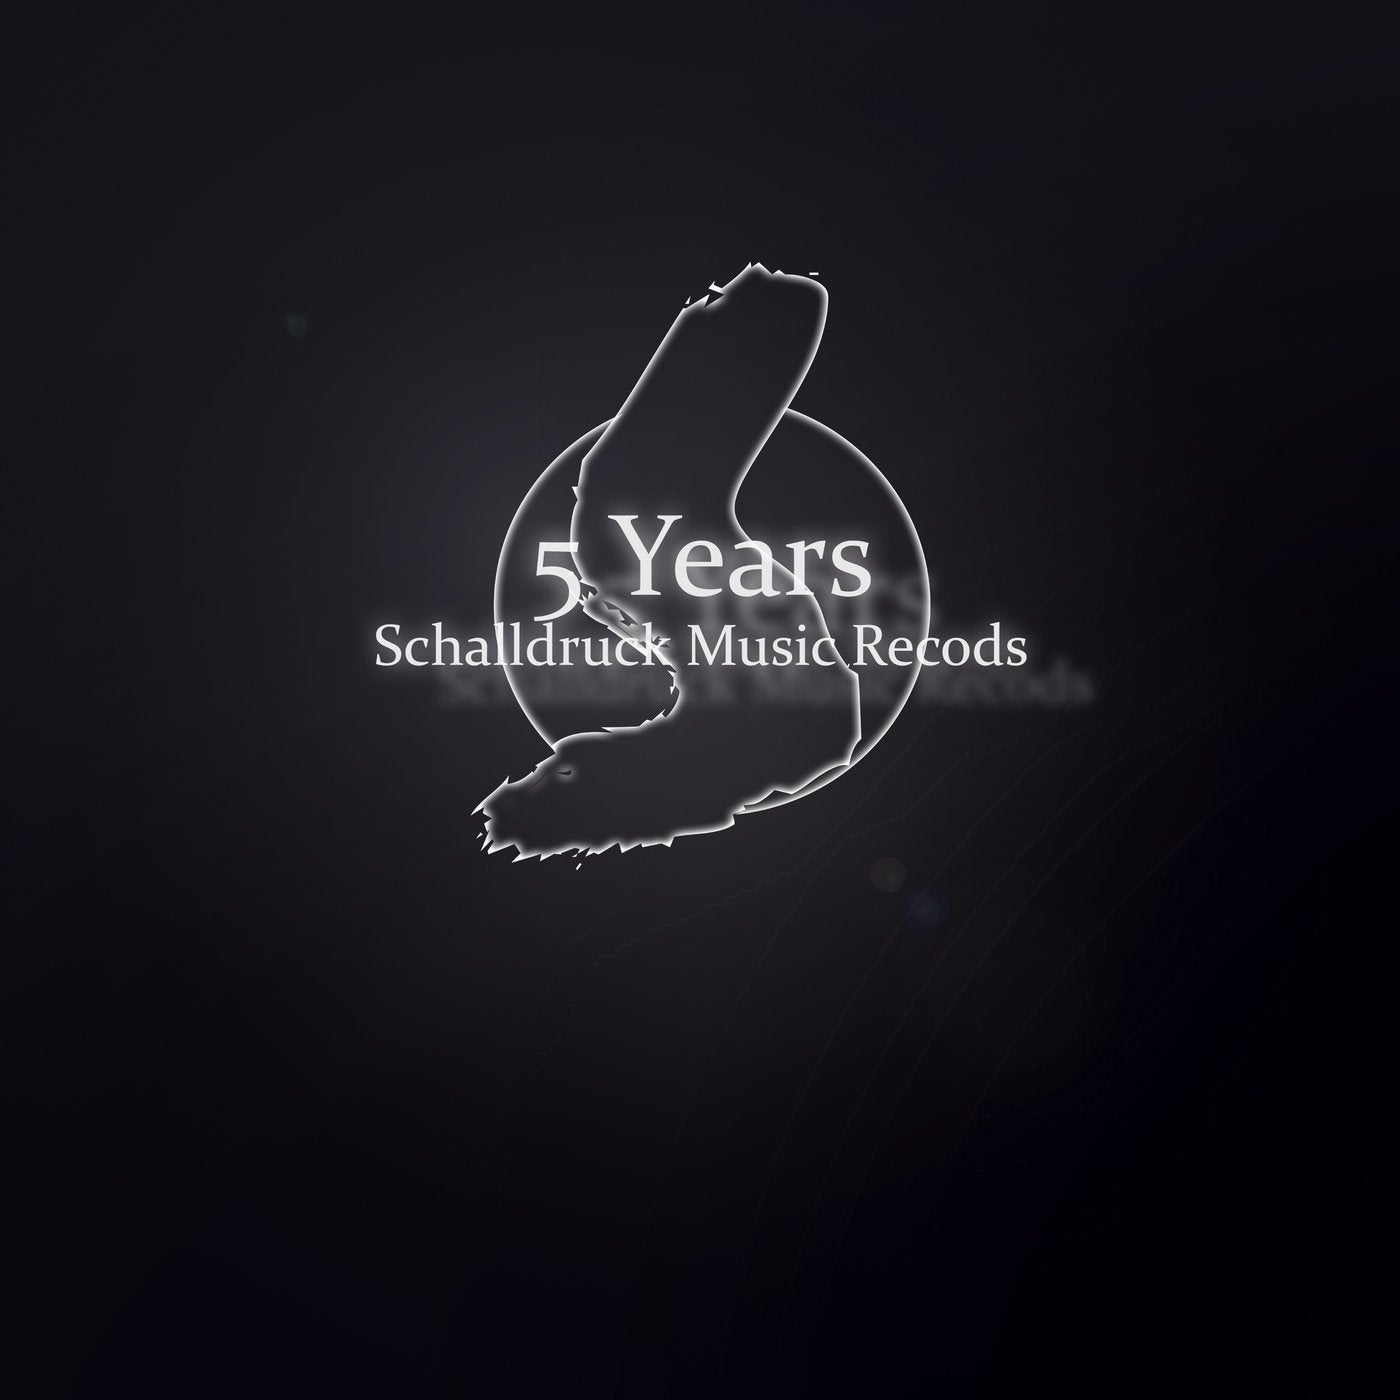 5 Years Schalldruck Music Records